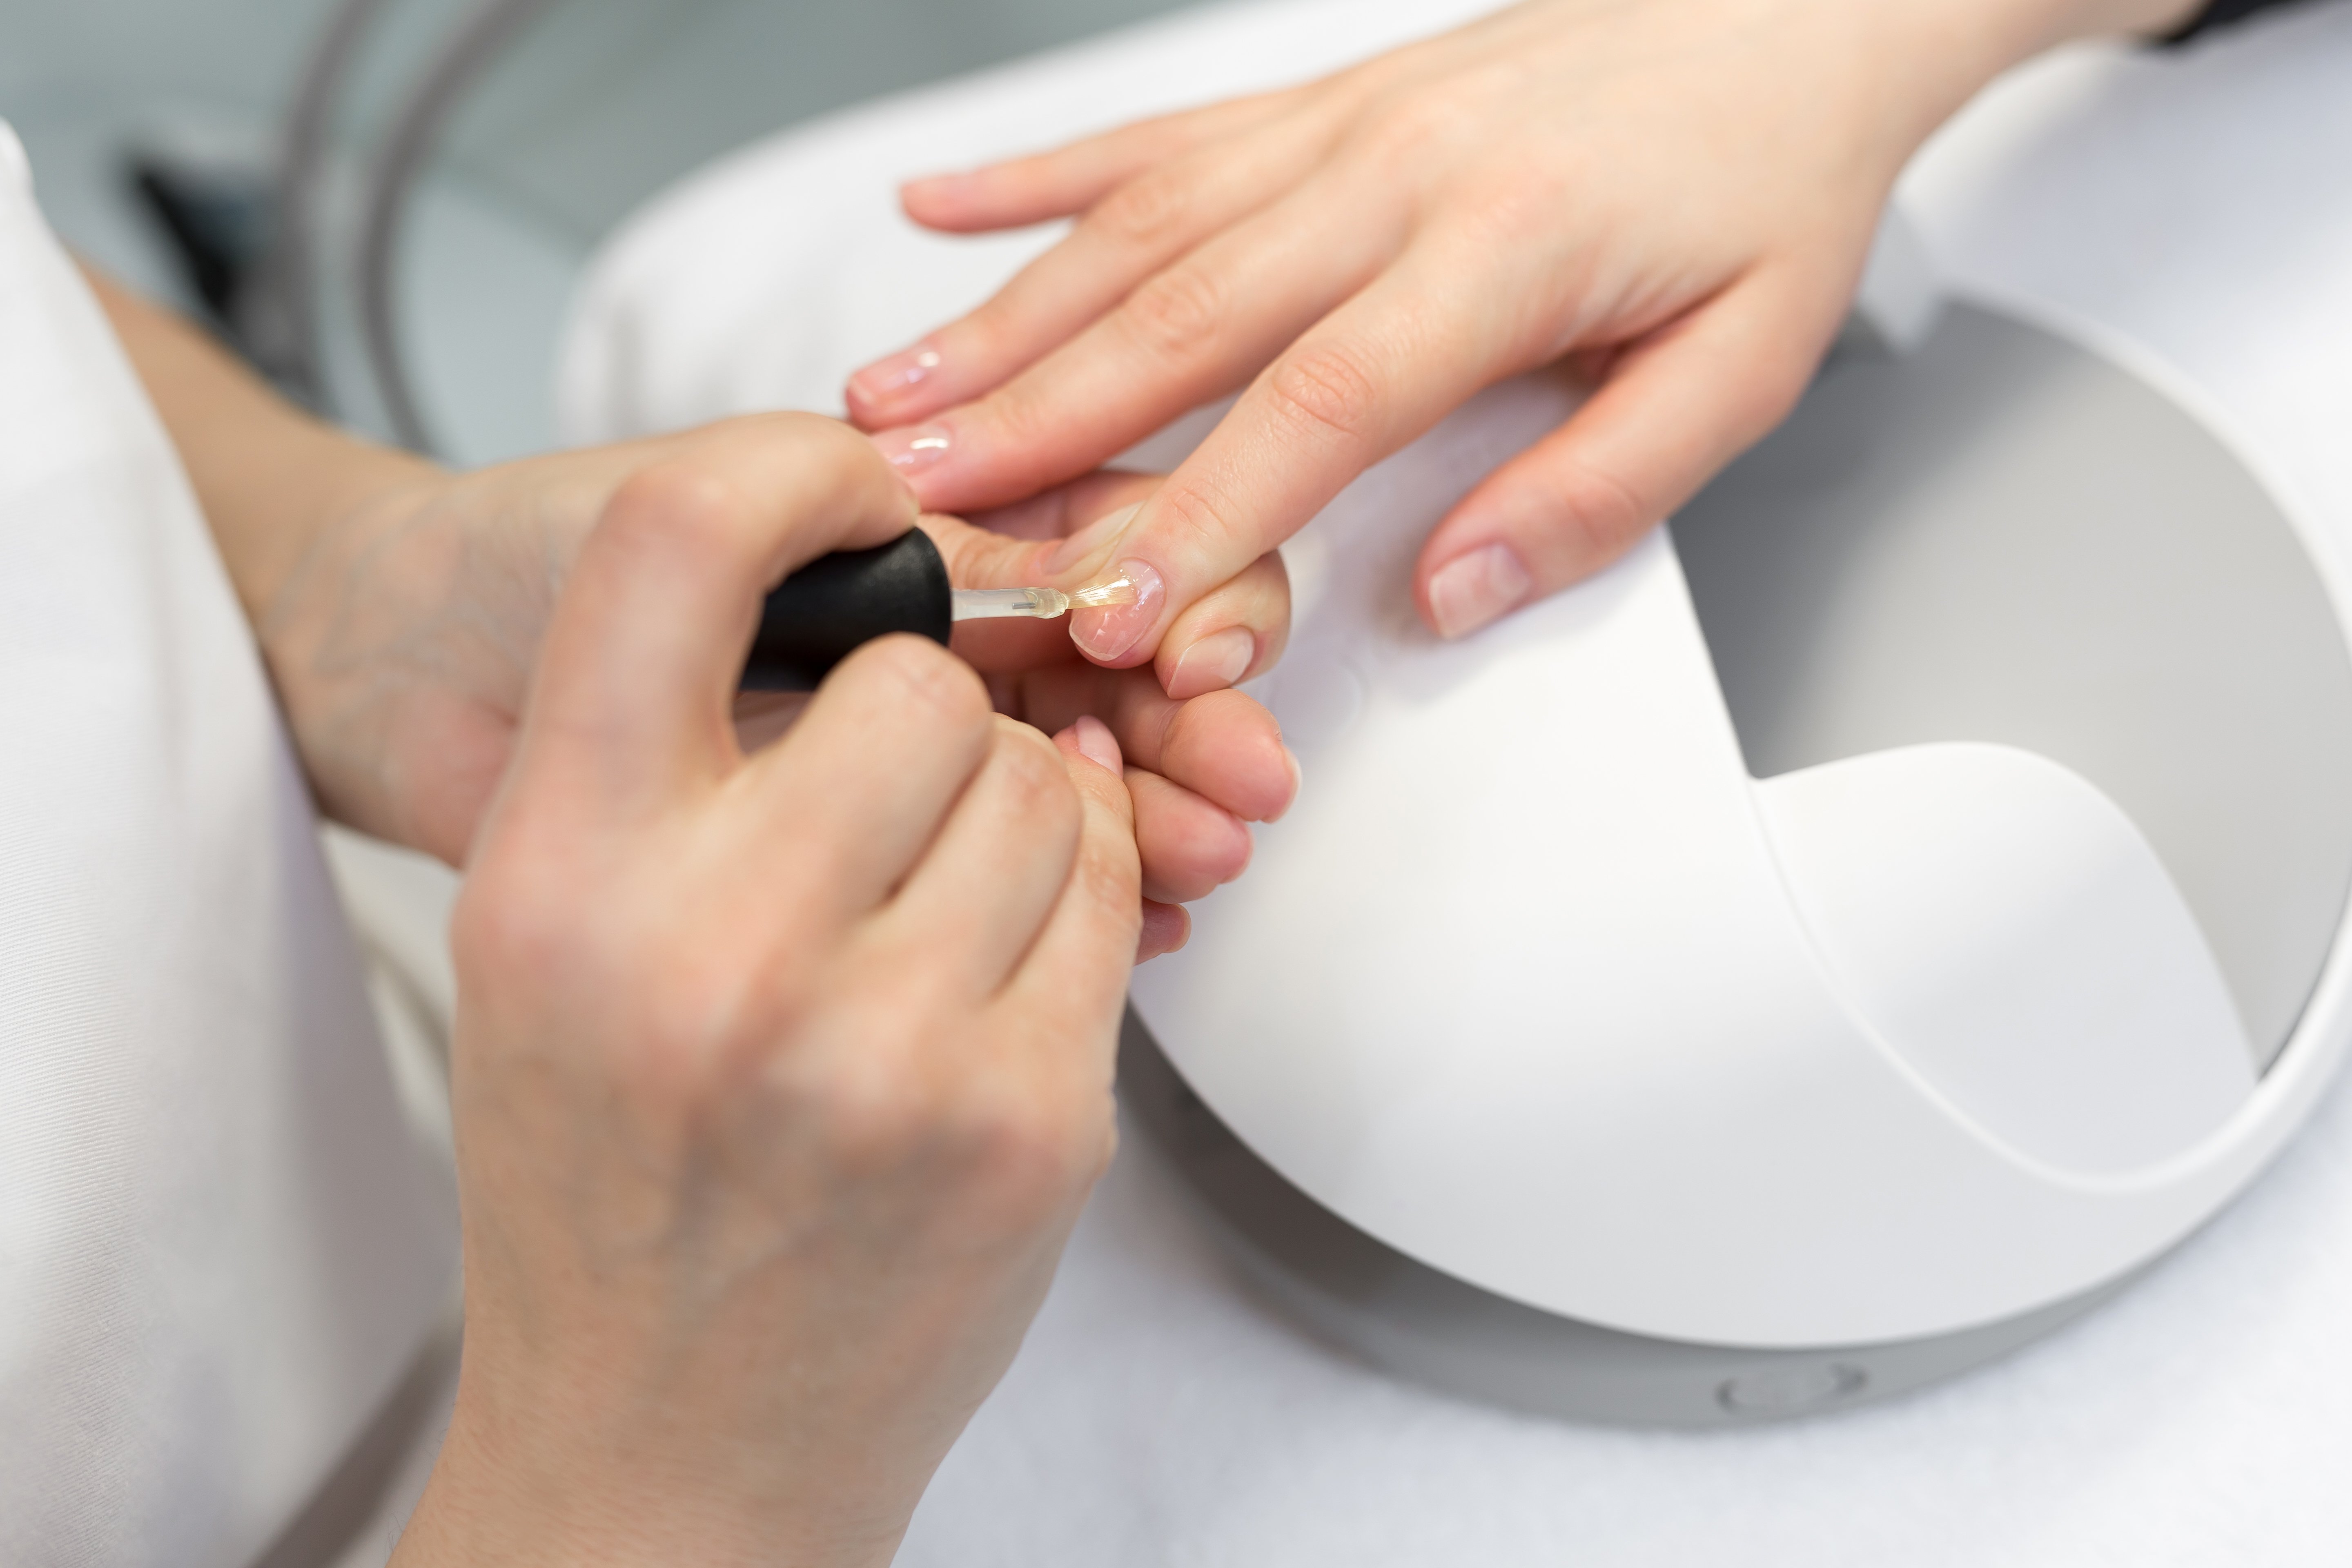 A nail technician applying nail polish to a woman's fingers. | Source: Shutterstock